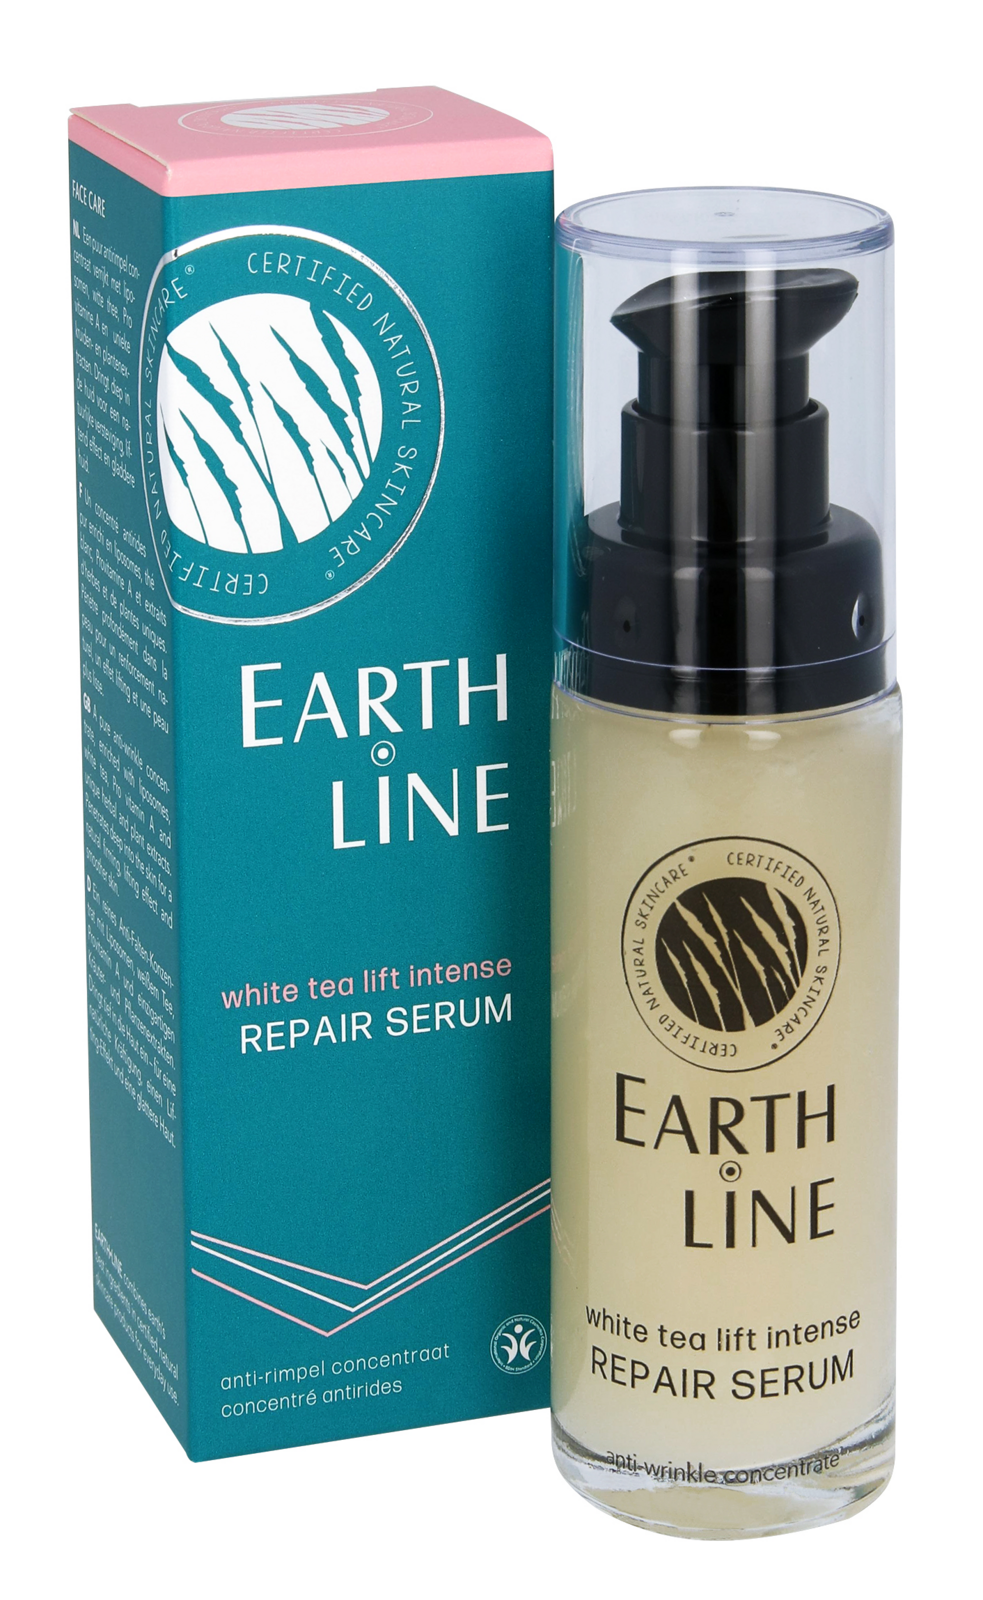 Earth Line White Tea Lift Intense Repair Serum